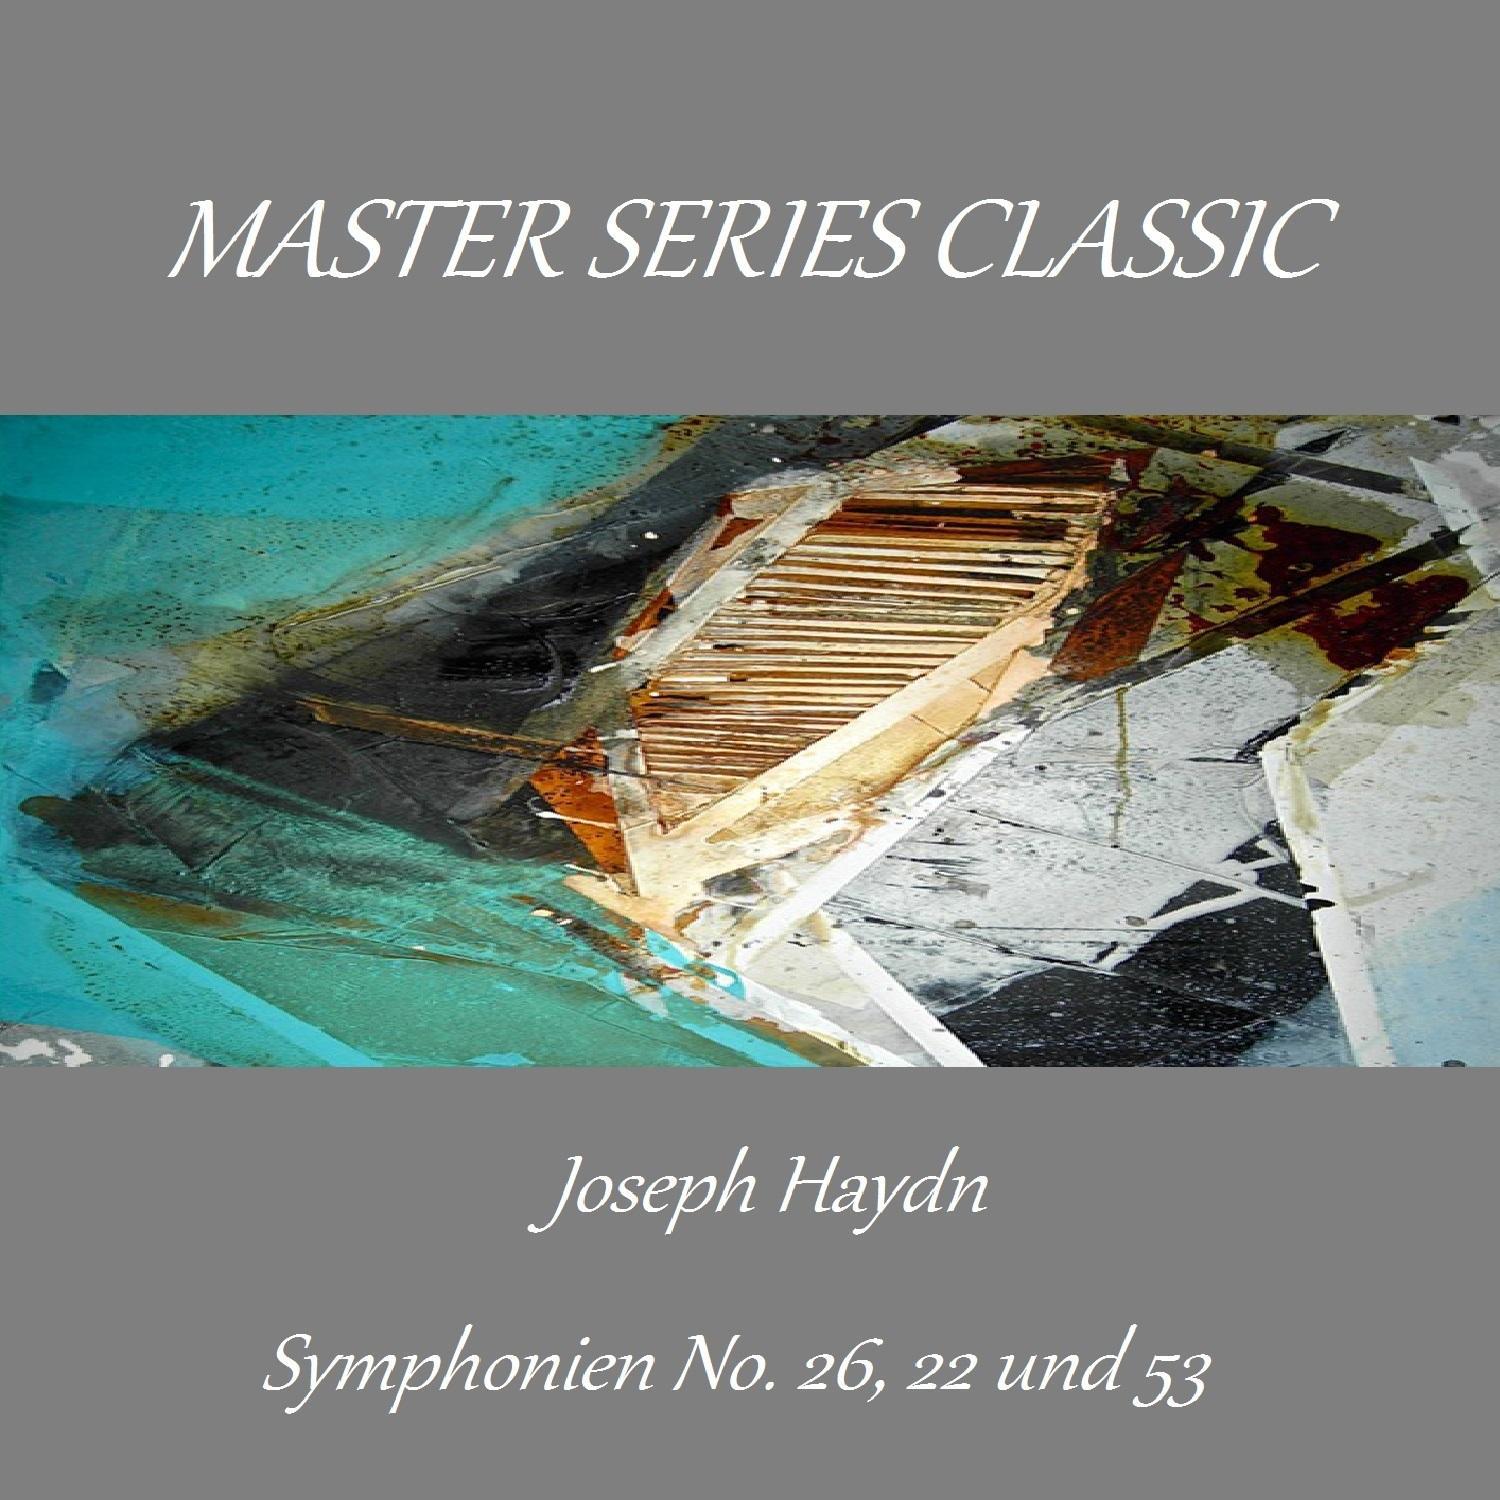 Master Series Classic - Joseph Haydn - Symphonien No. 26, 22 und 53